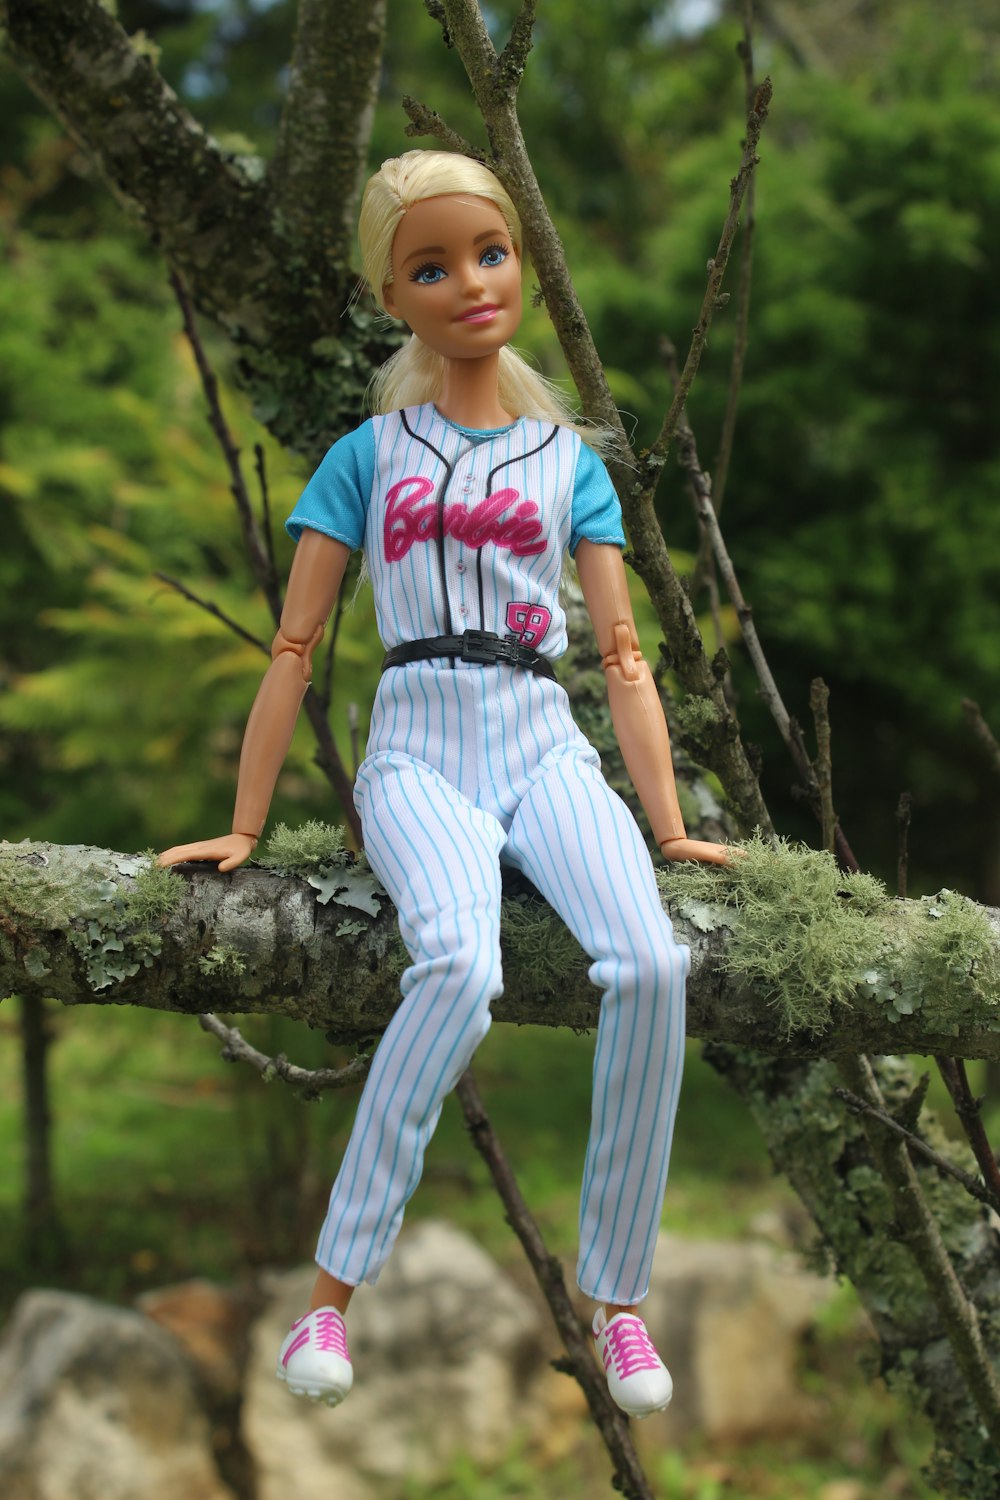 doll wearing baseball jersey sitting on tree branch during daytime